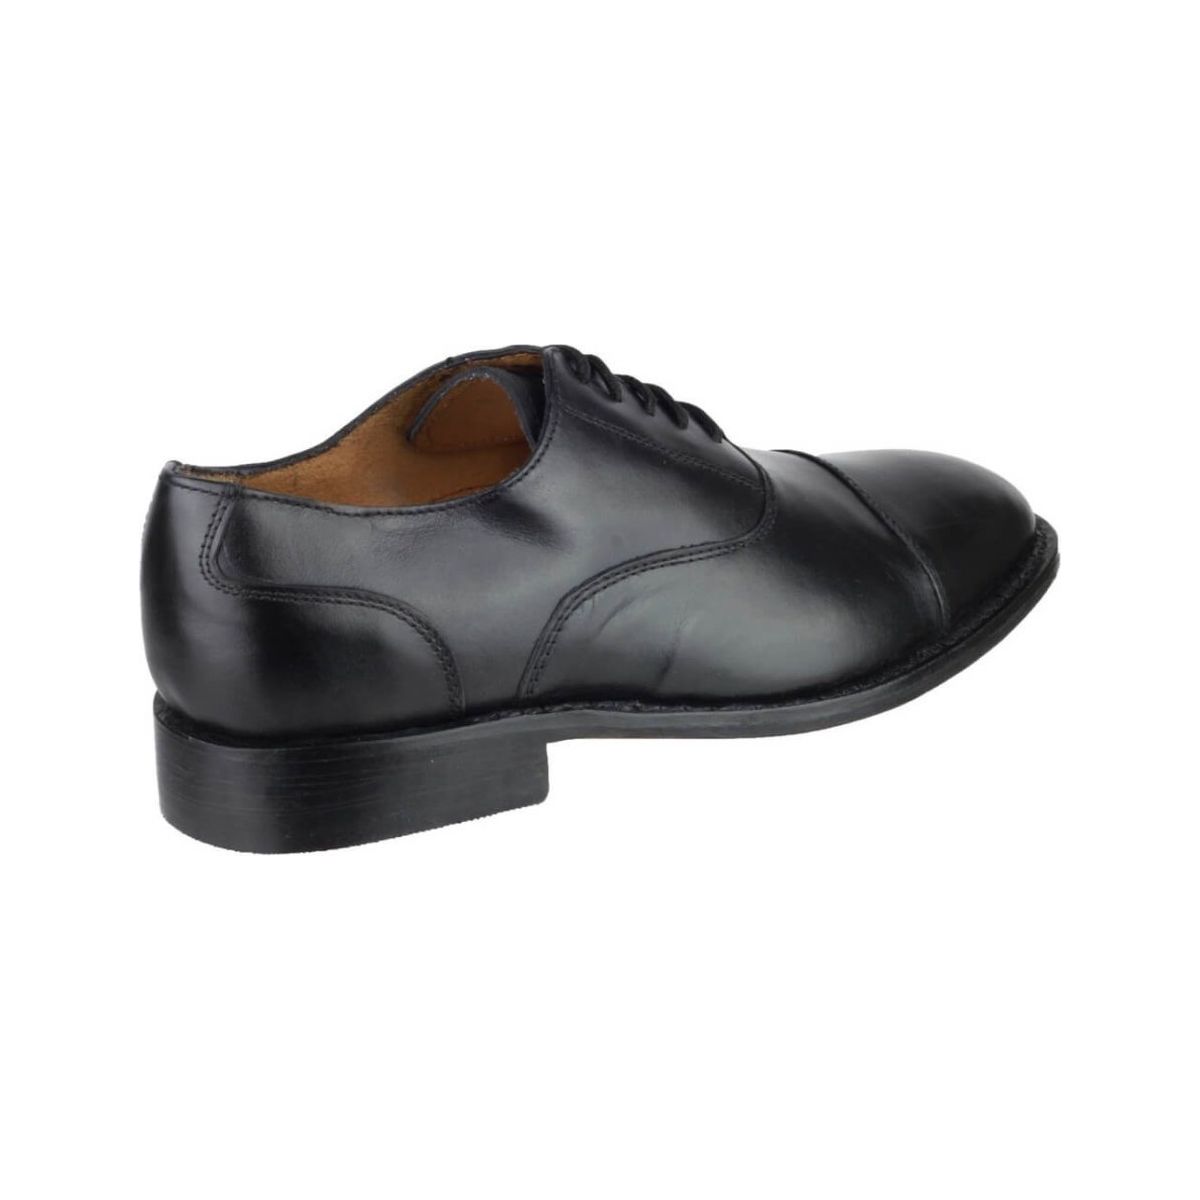 Amblers James Oxford Shoes Mens - workweargurus.com